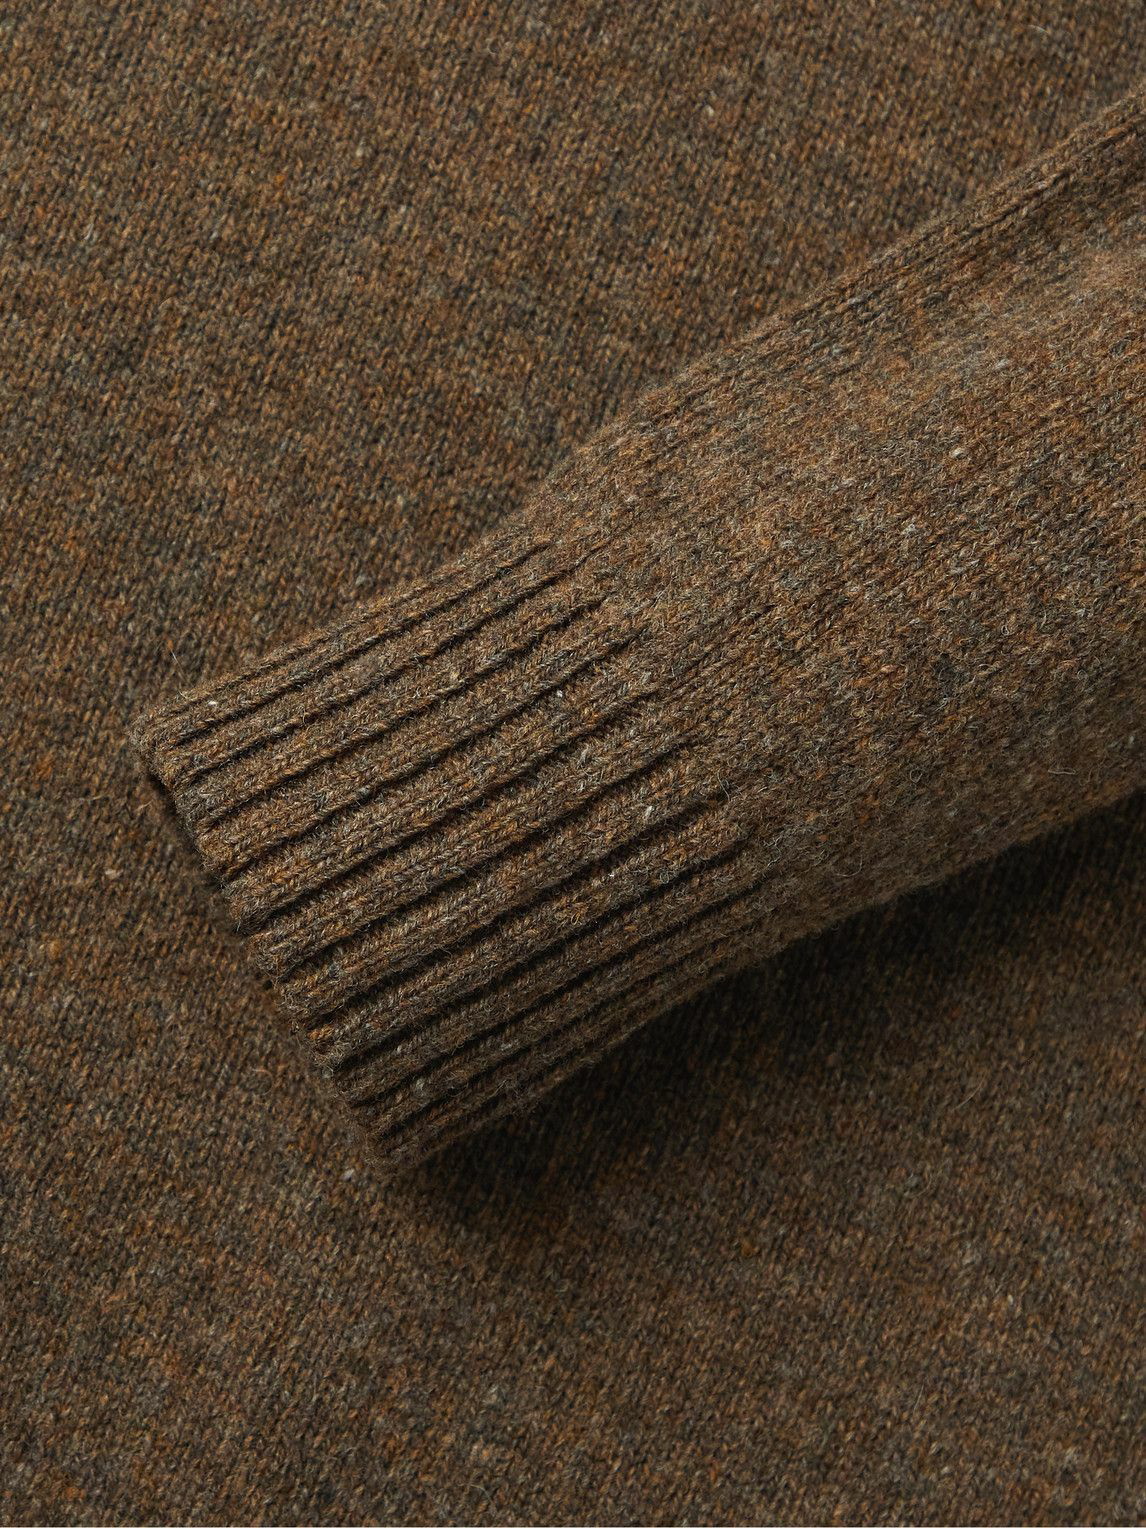 Anderson & Sheppard - Shetland Wool Sweater - Brown Anderson & Sheppard